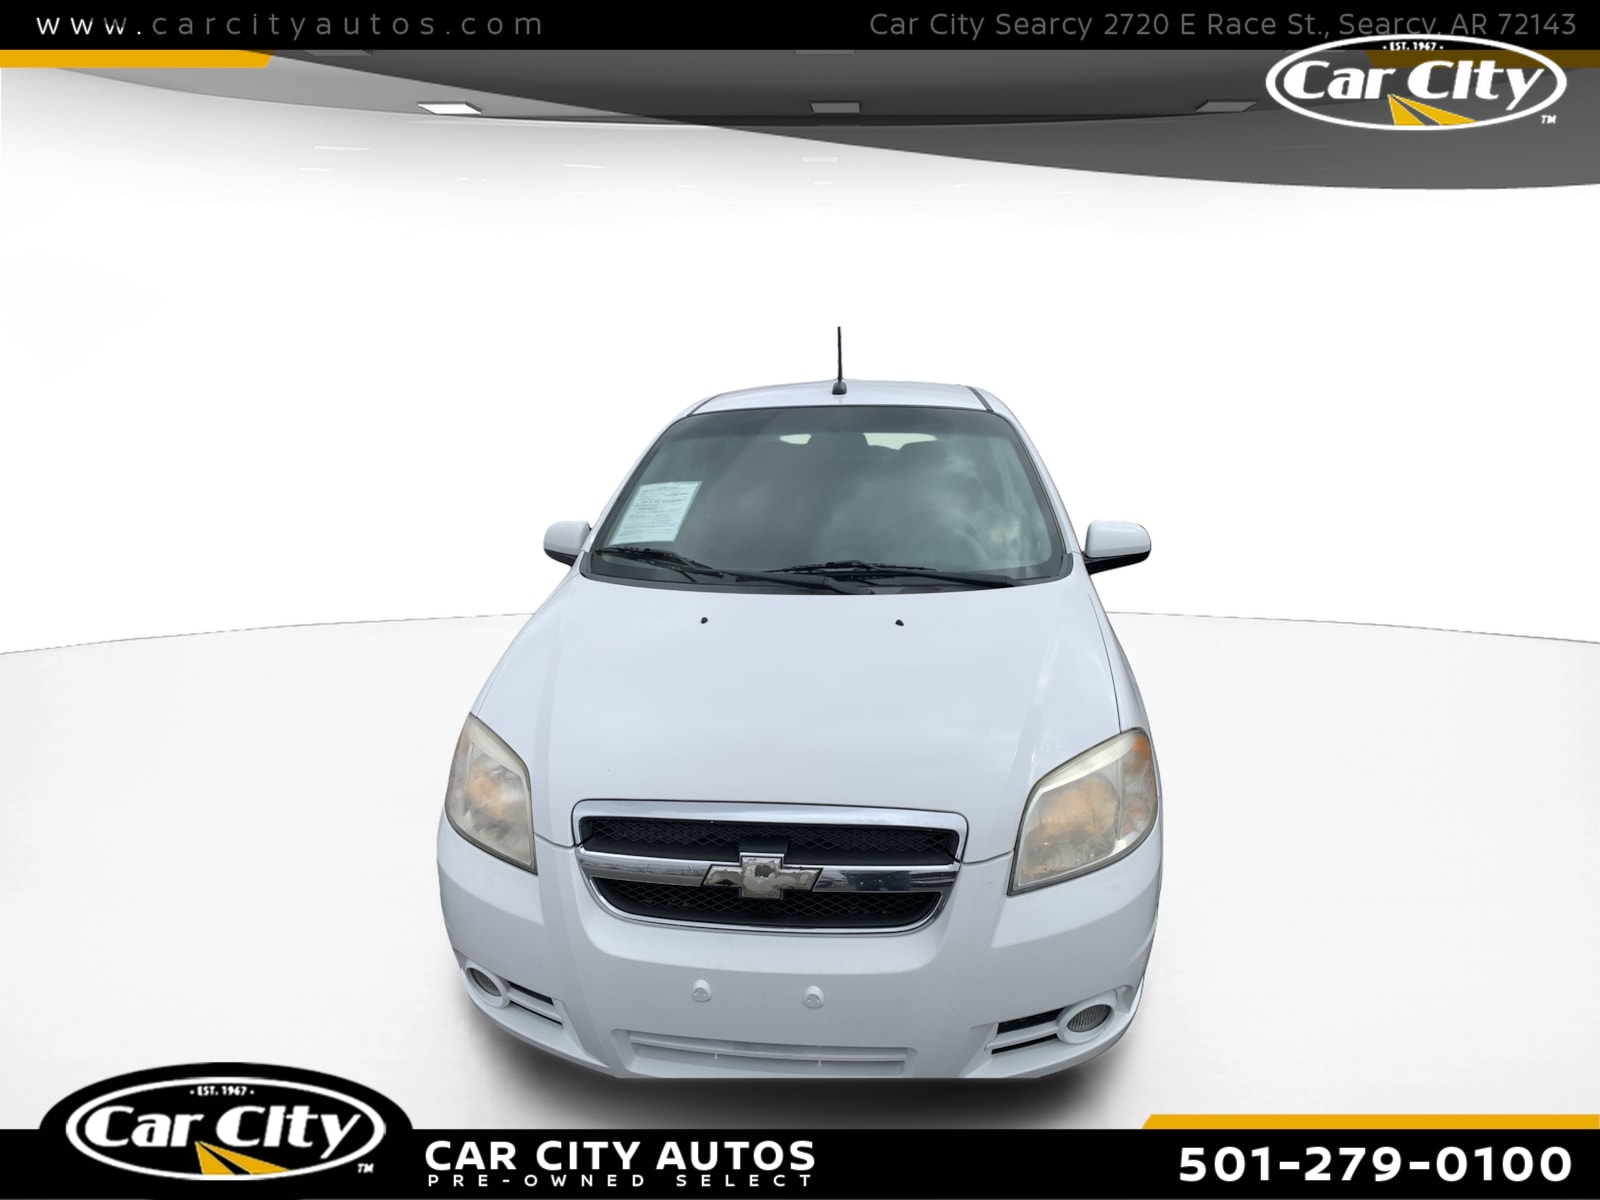 2010 Chevrolet Aveo LT w/2LT  - AB122761T  - Car City Autos